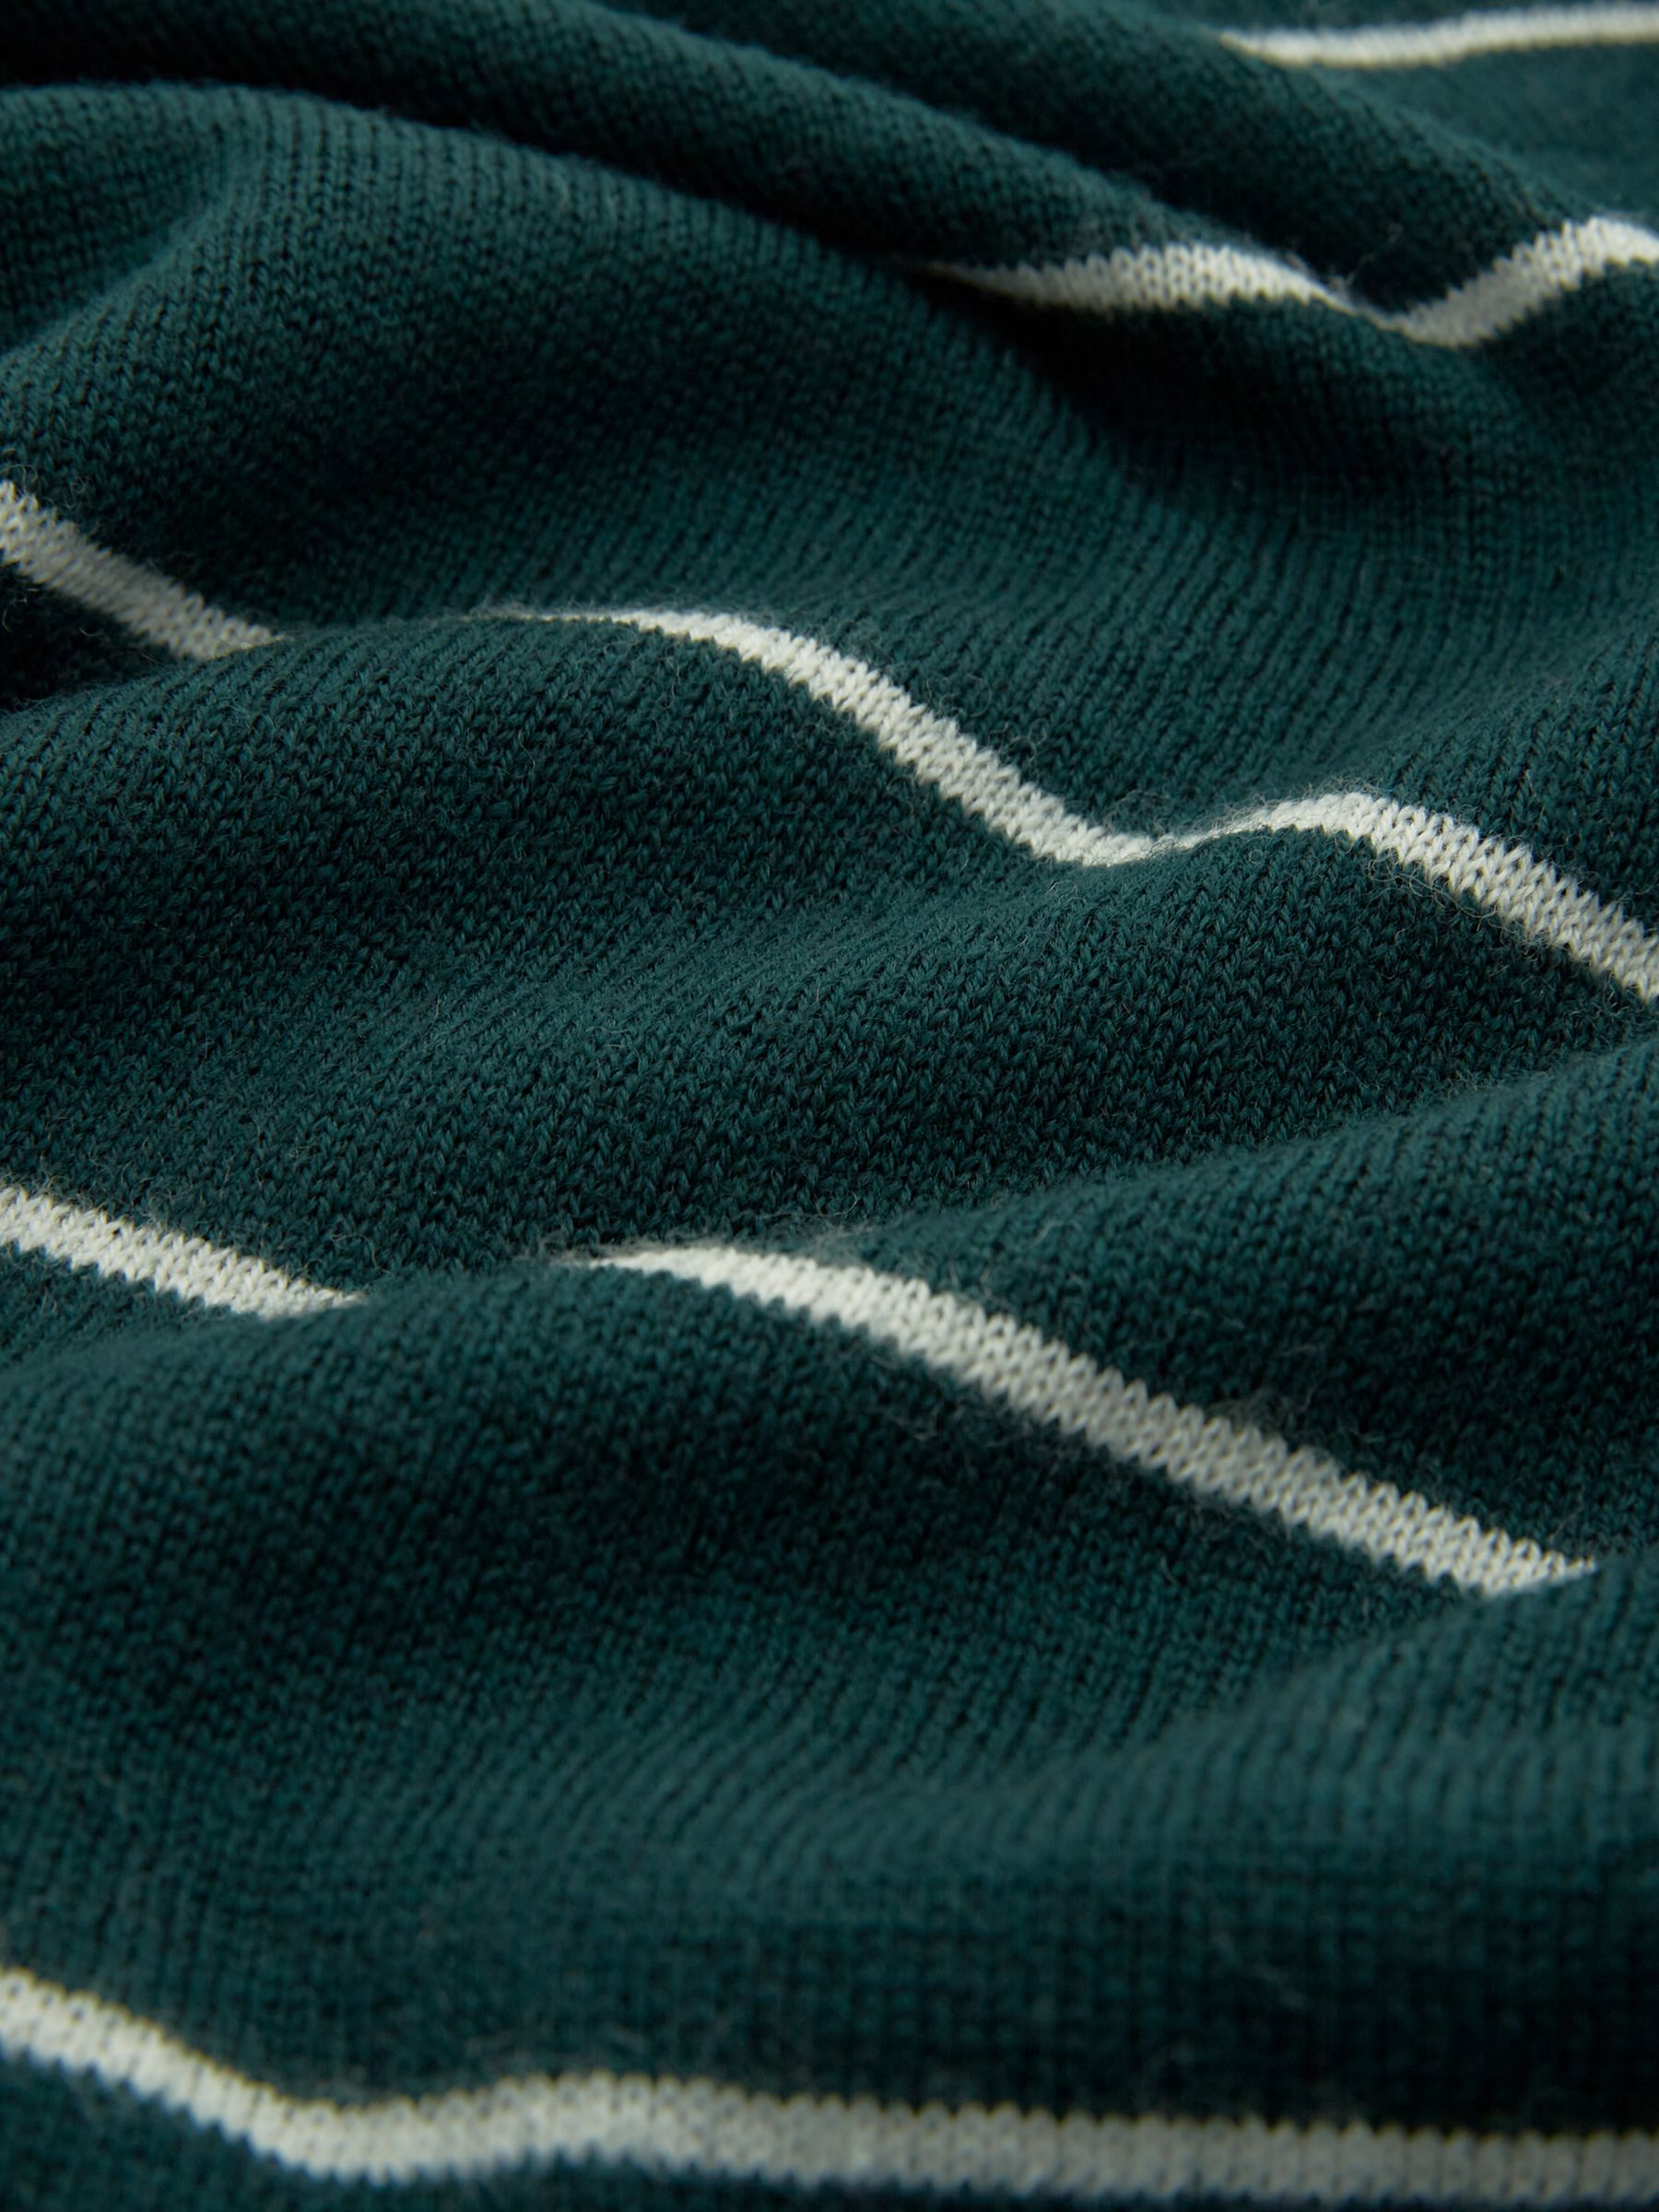 Buy Celtic & Co. Striped Fine Knit Merino Wool Jumper, Pine Online at johnlewis.com